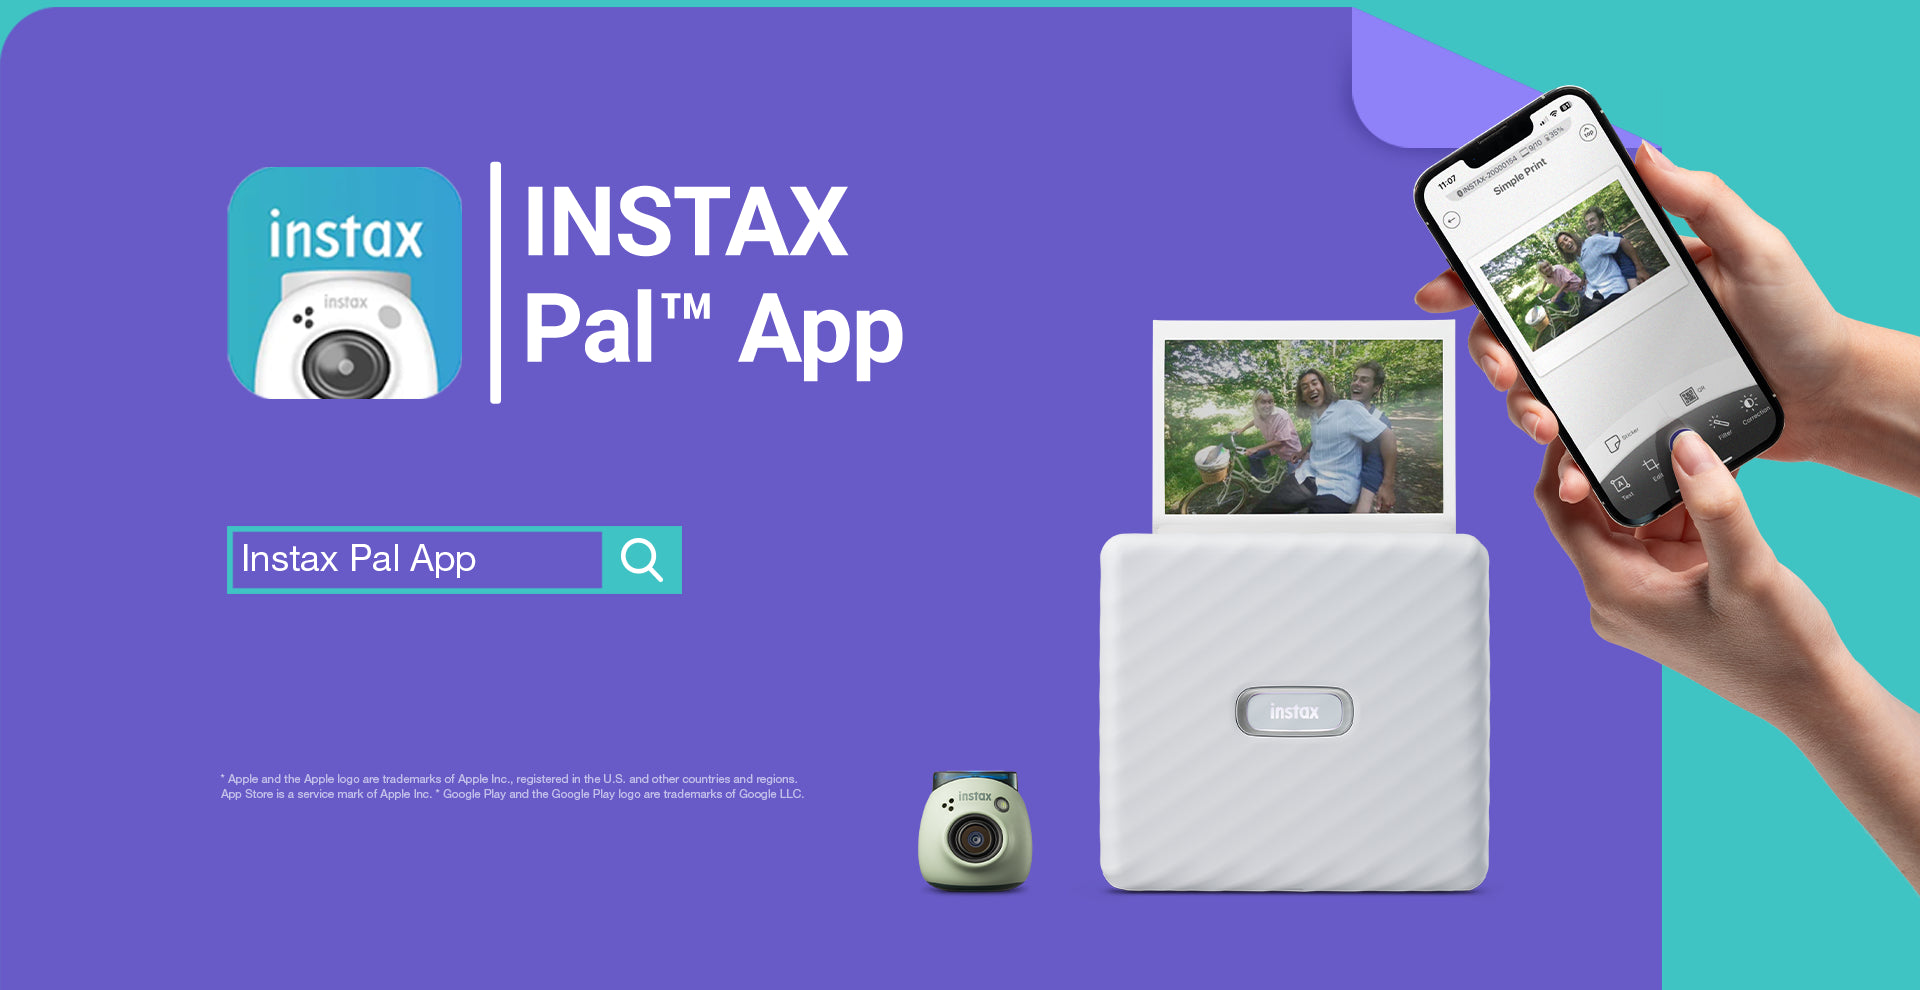 Instax Pal App